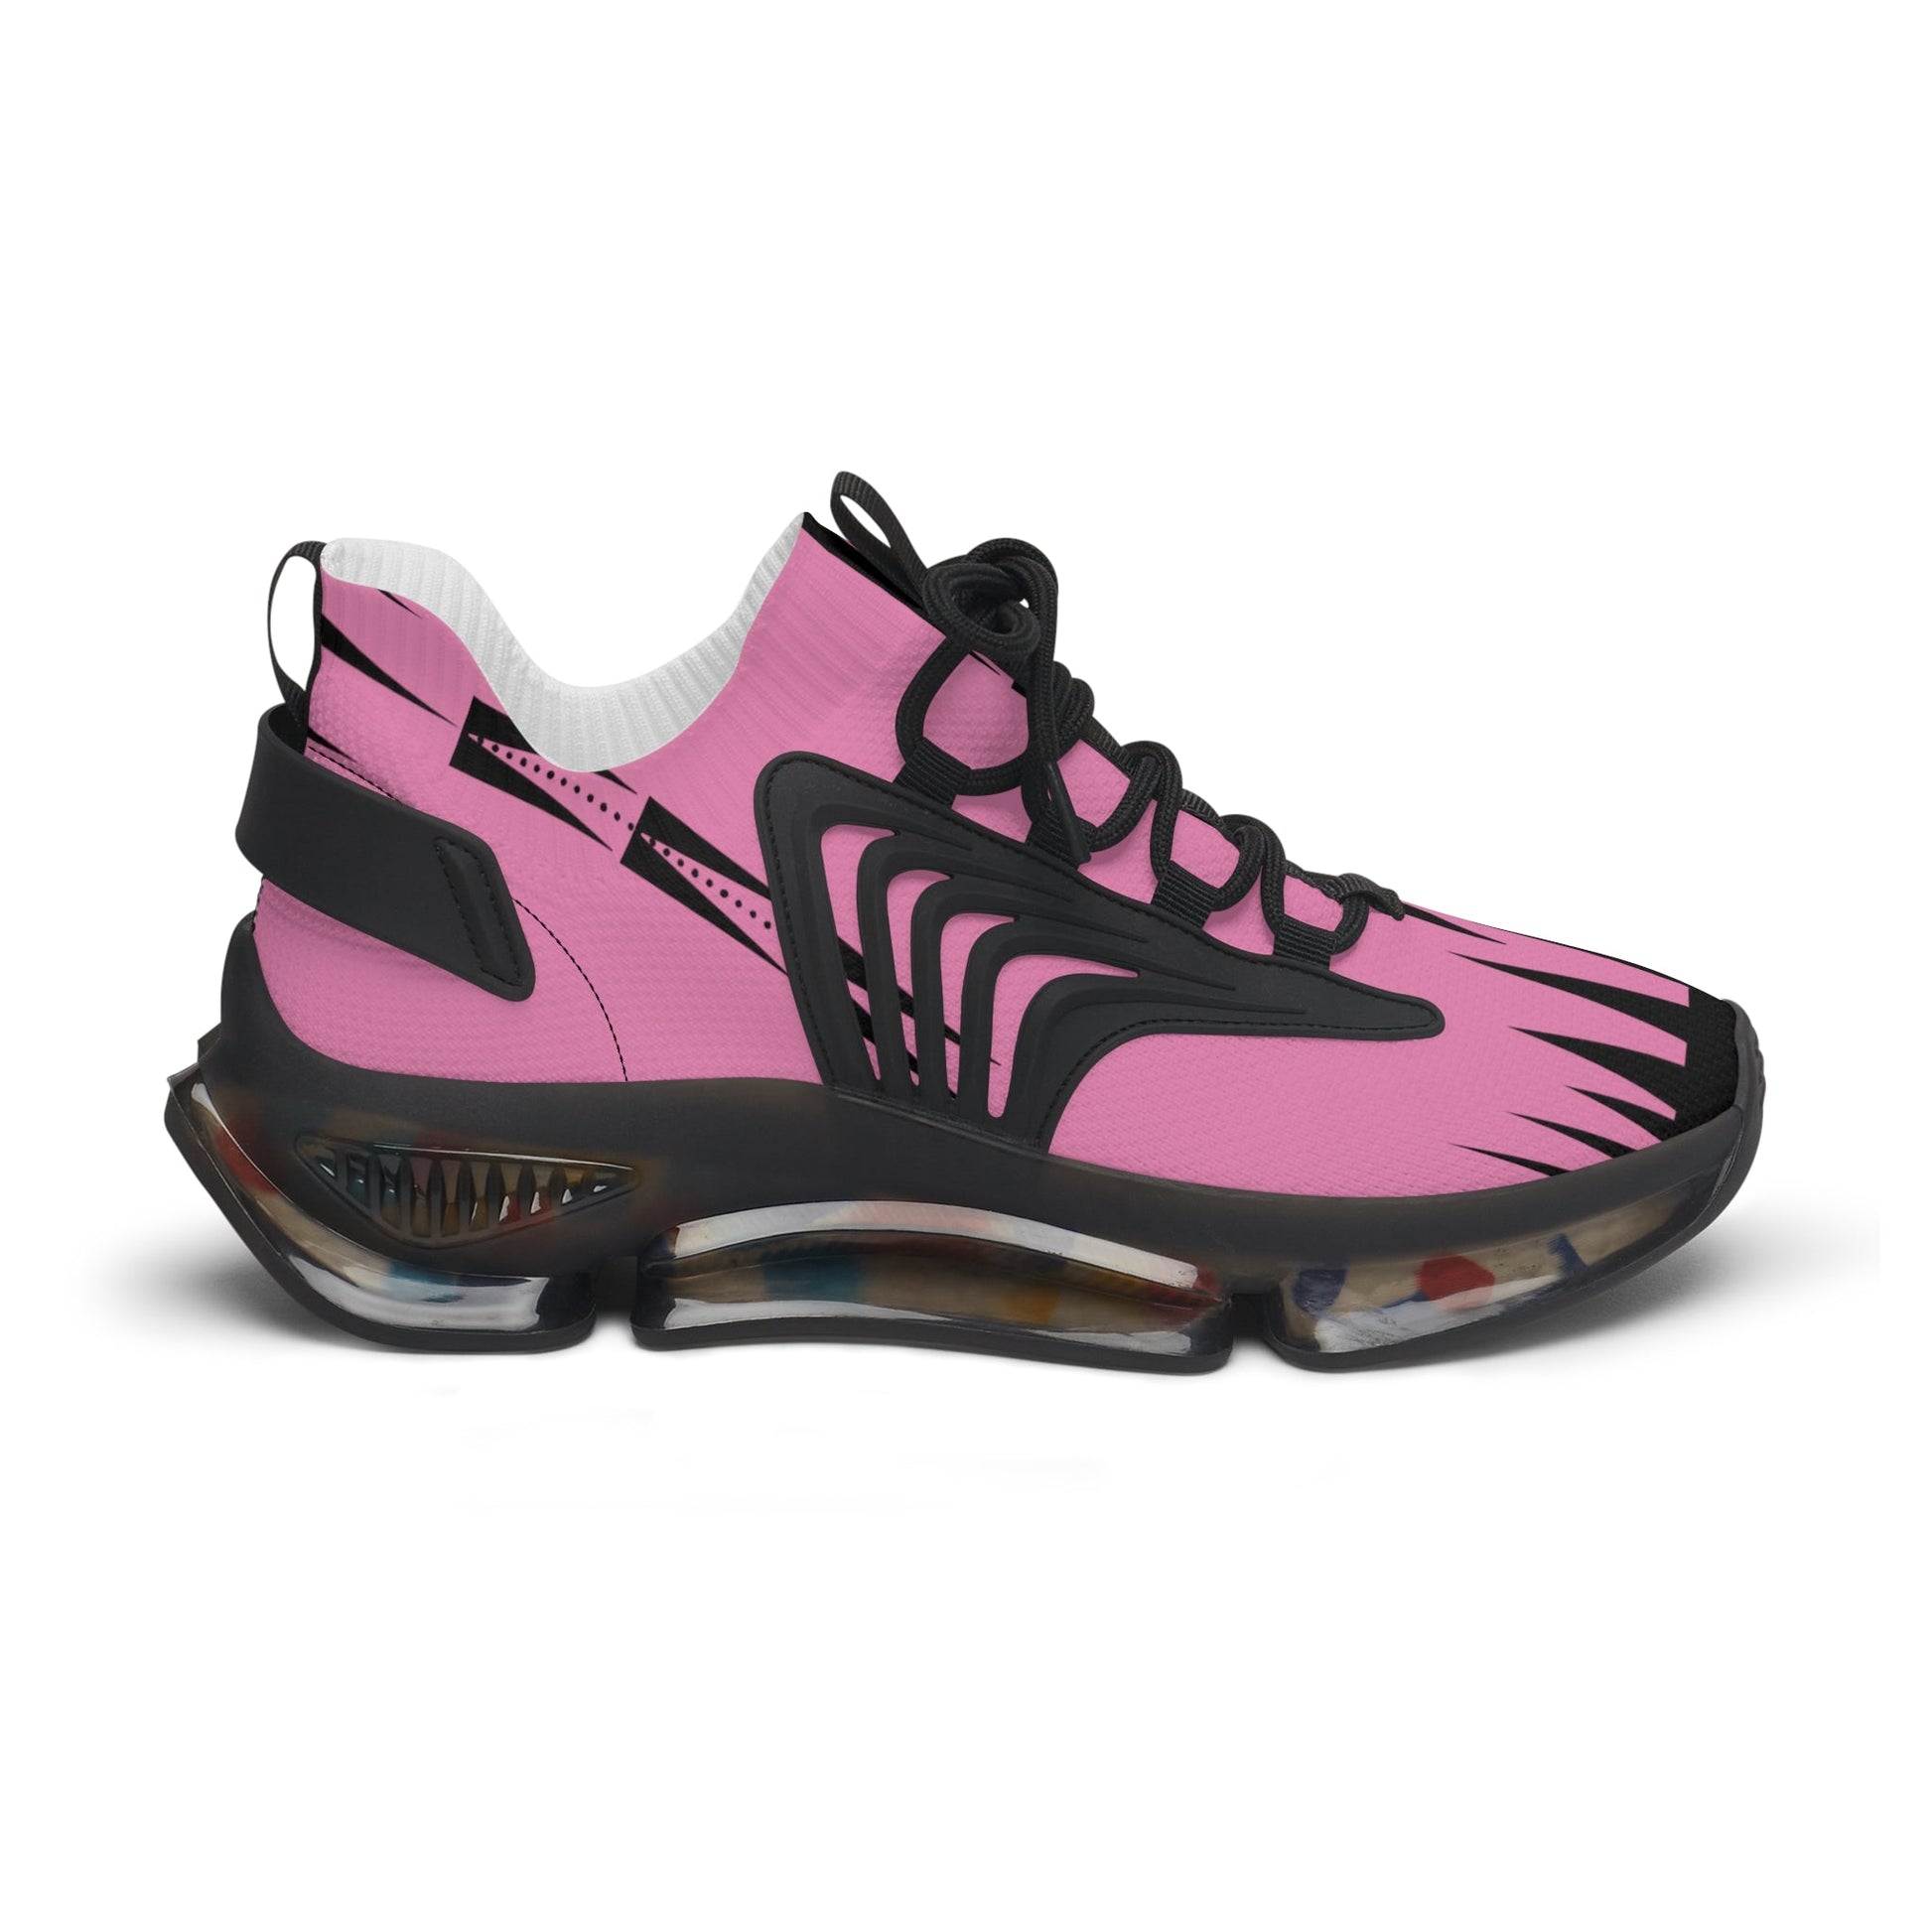 Women's Native Pink Mesh Sneakers - Nikikw Designs